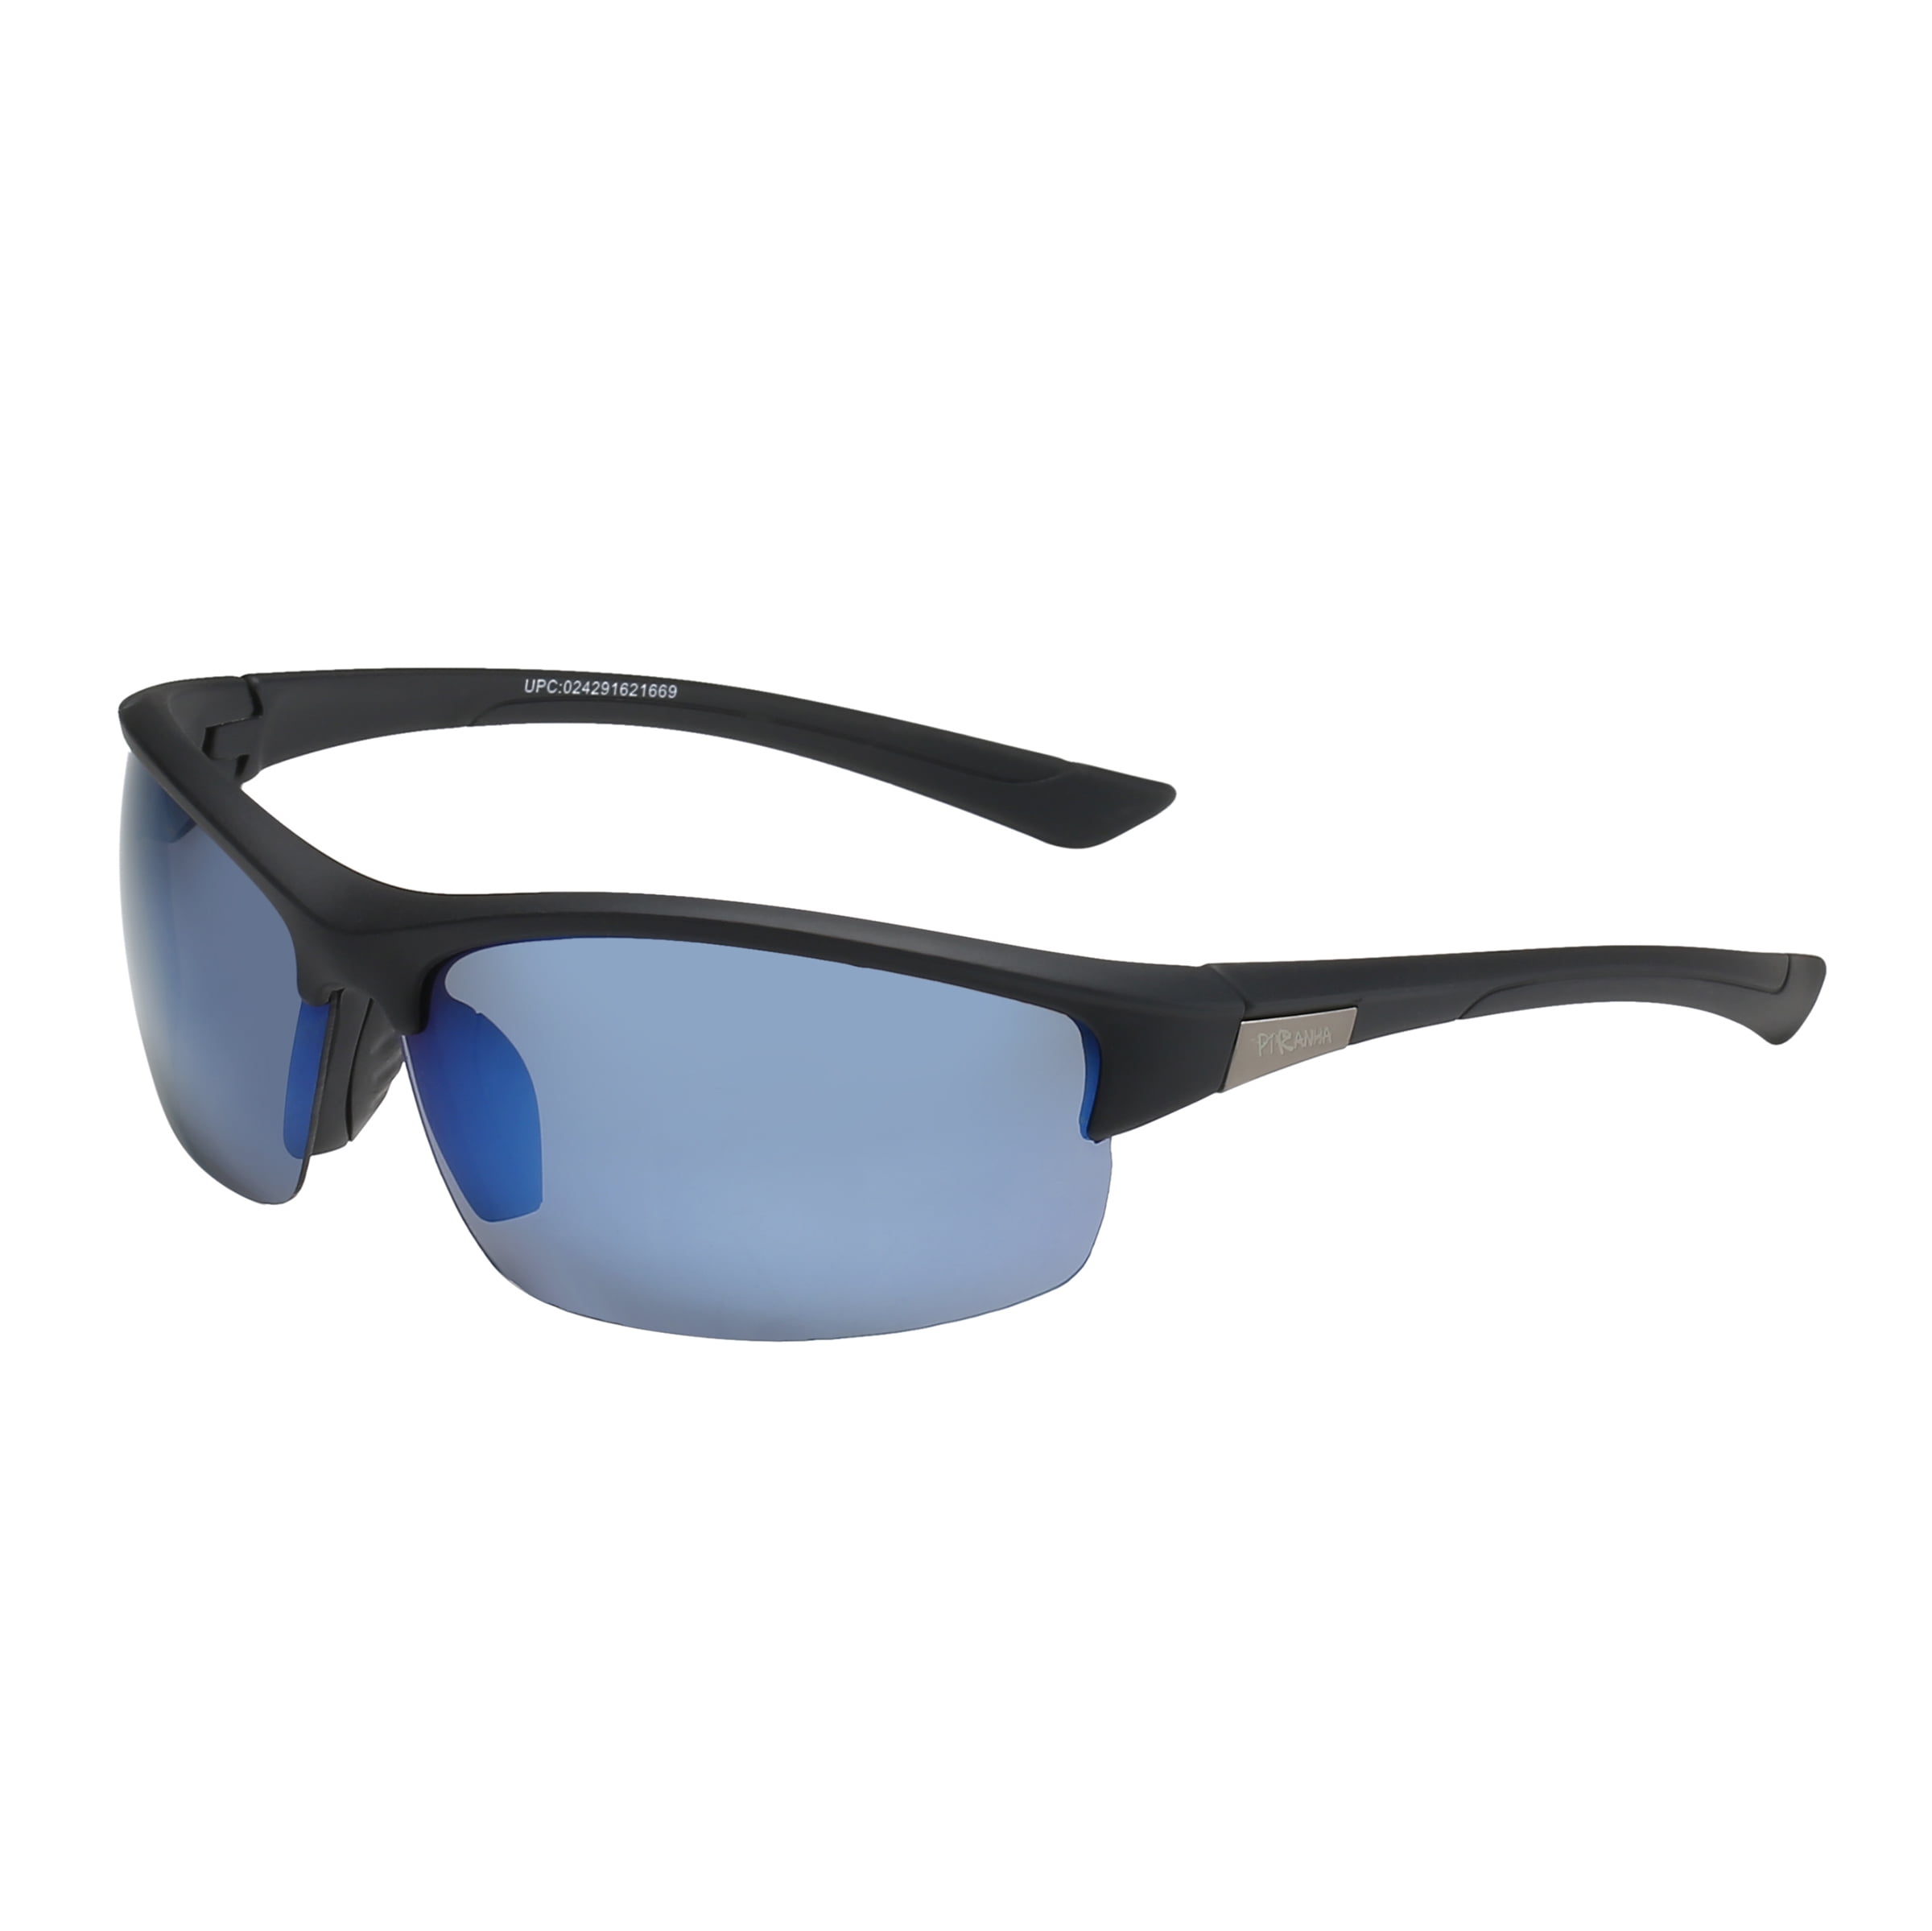 Wiley X AirRage Sunglasses Black Polarized Blue Mirror Lens